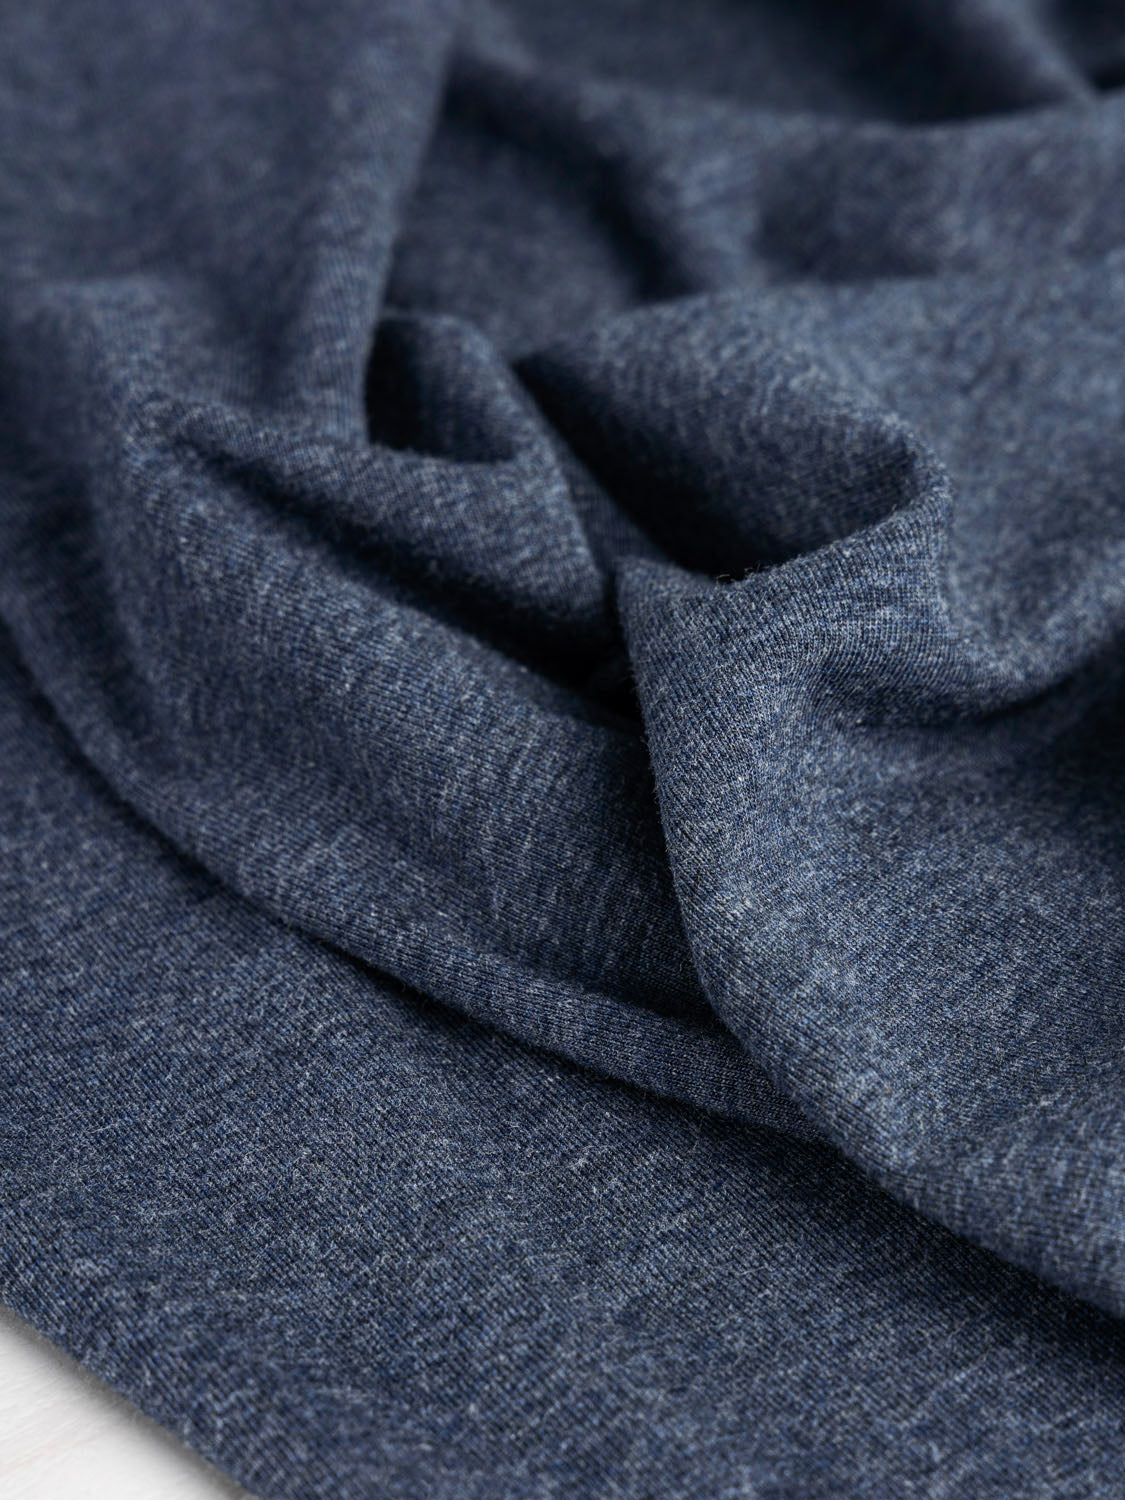 Purl Knit Fabric - Wool blend jersey- stretchy - Khaki green, grey